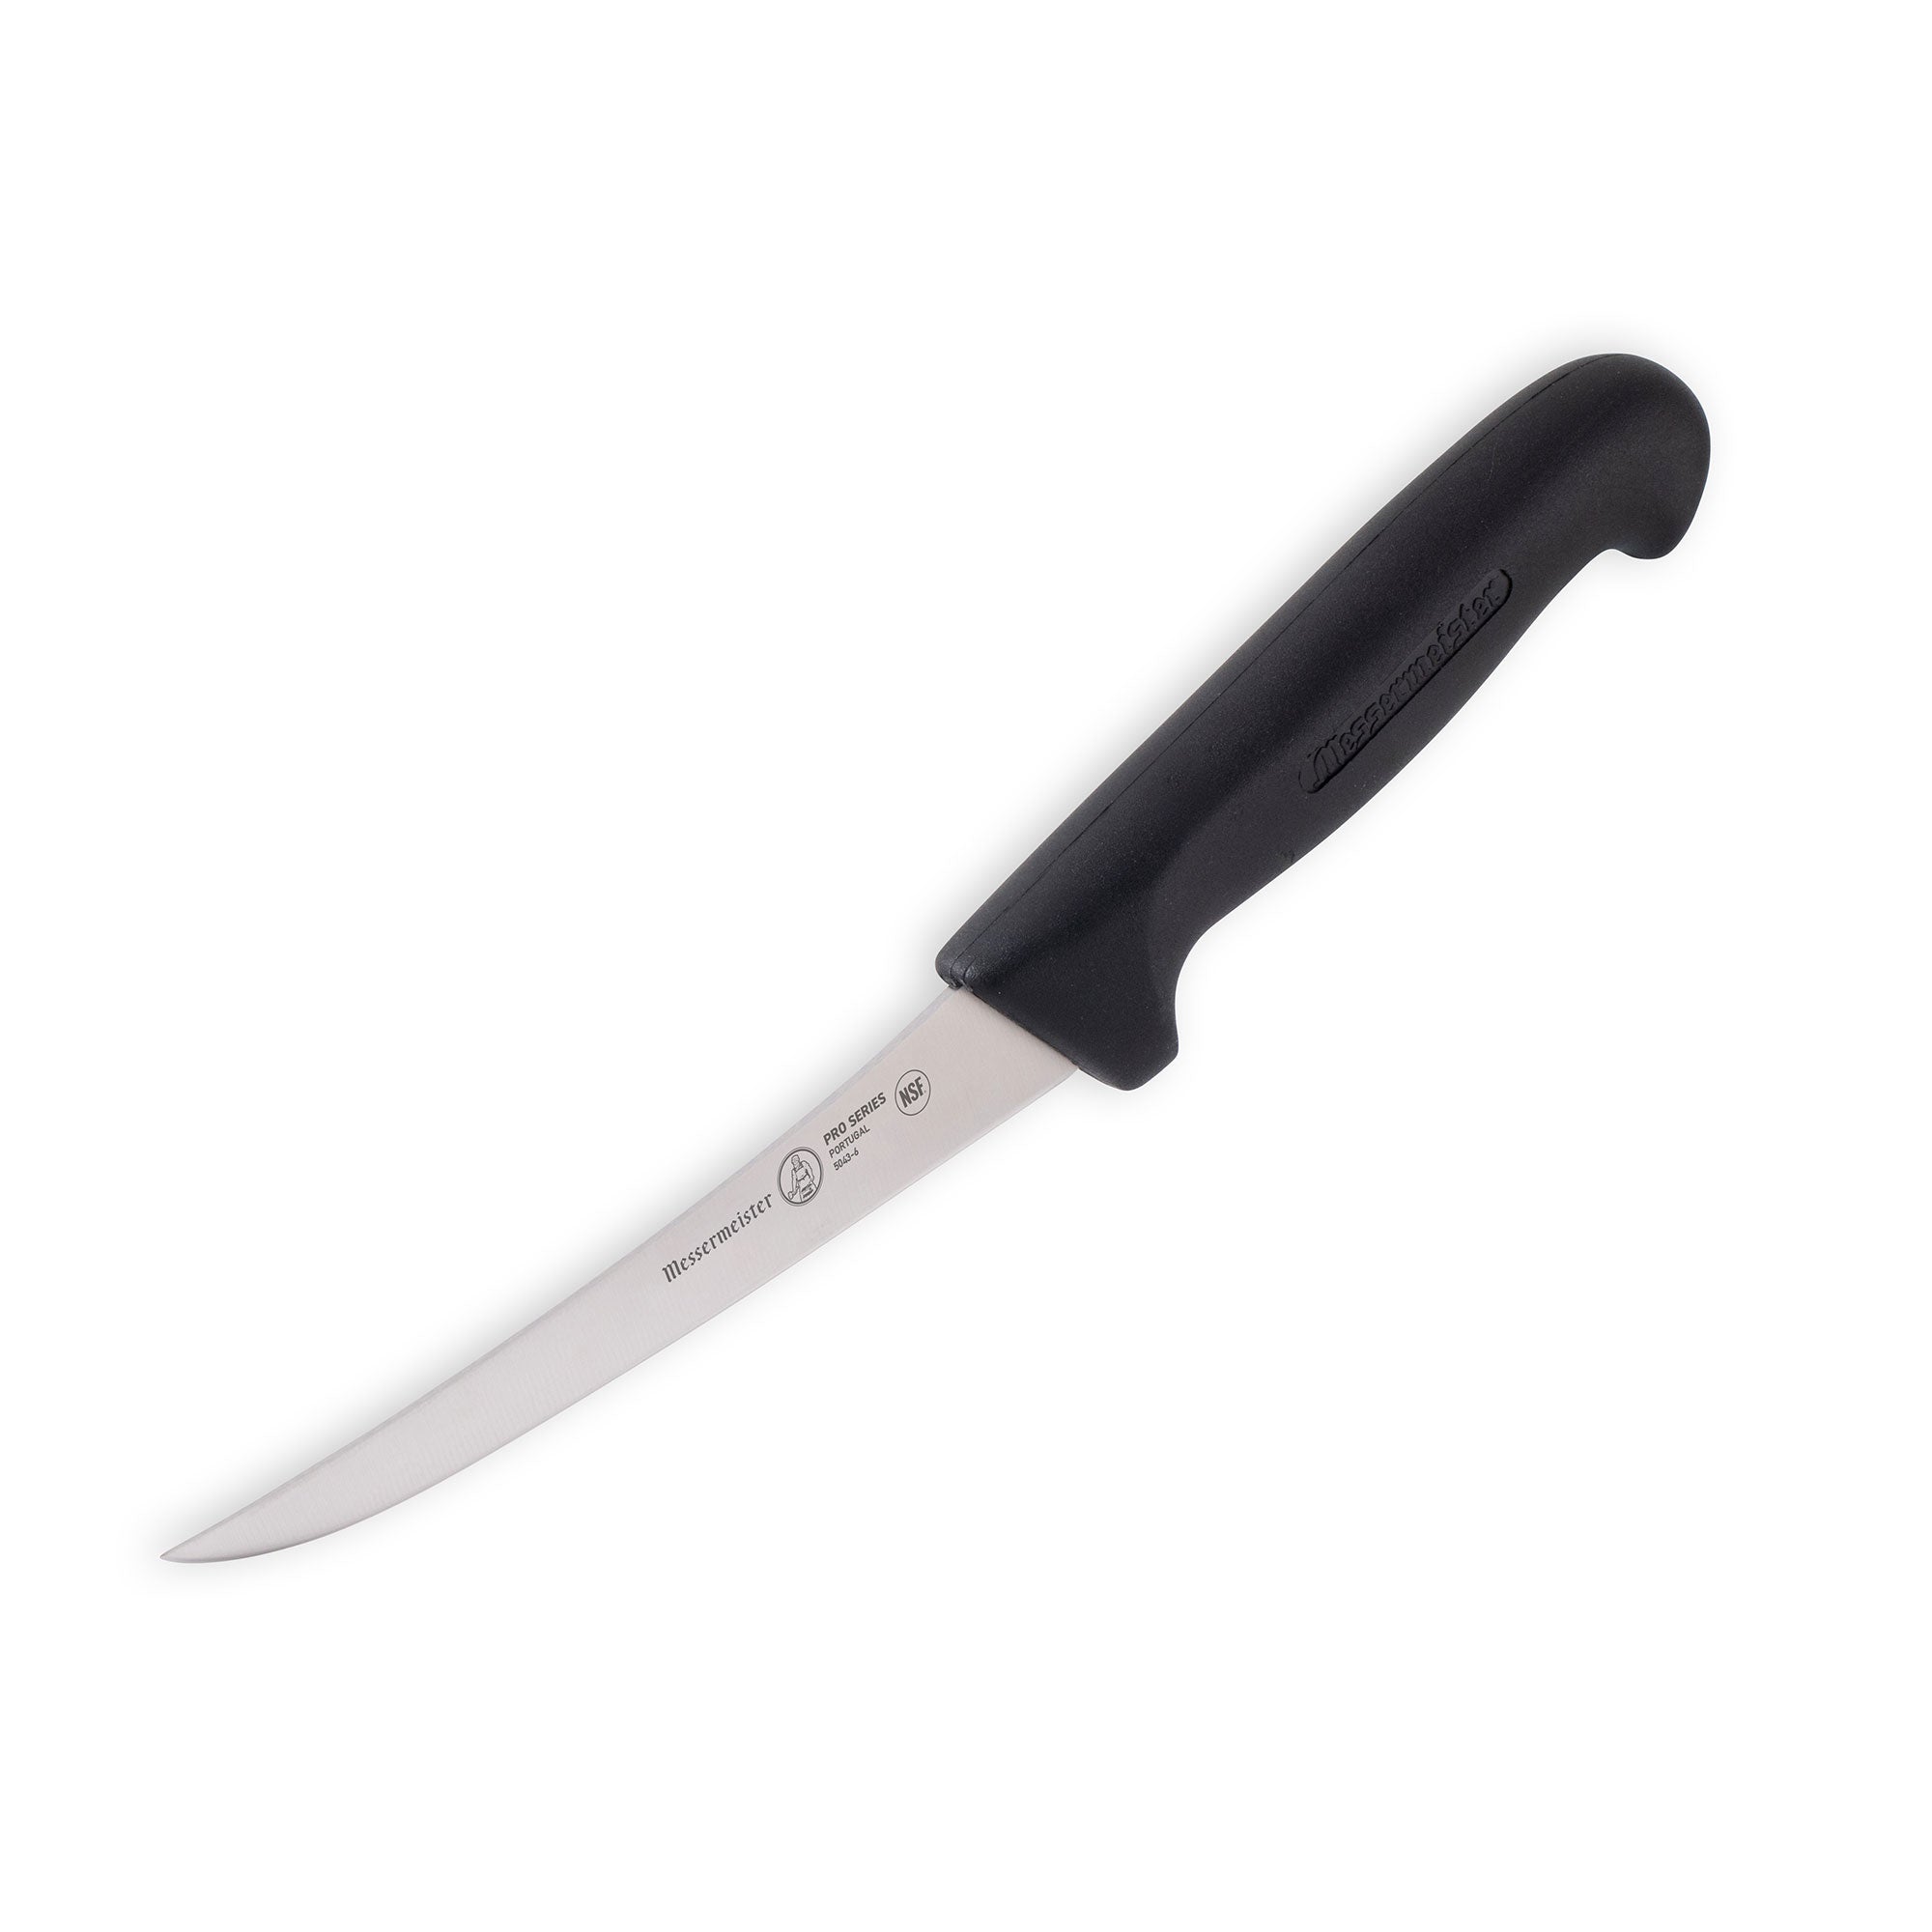 Victorinox Narrow Flexible Boning Knife, 6